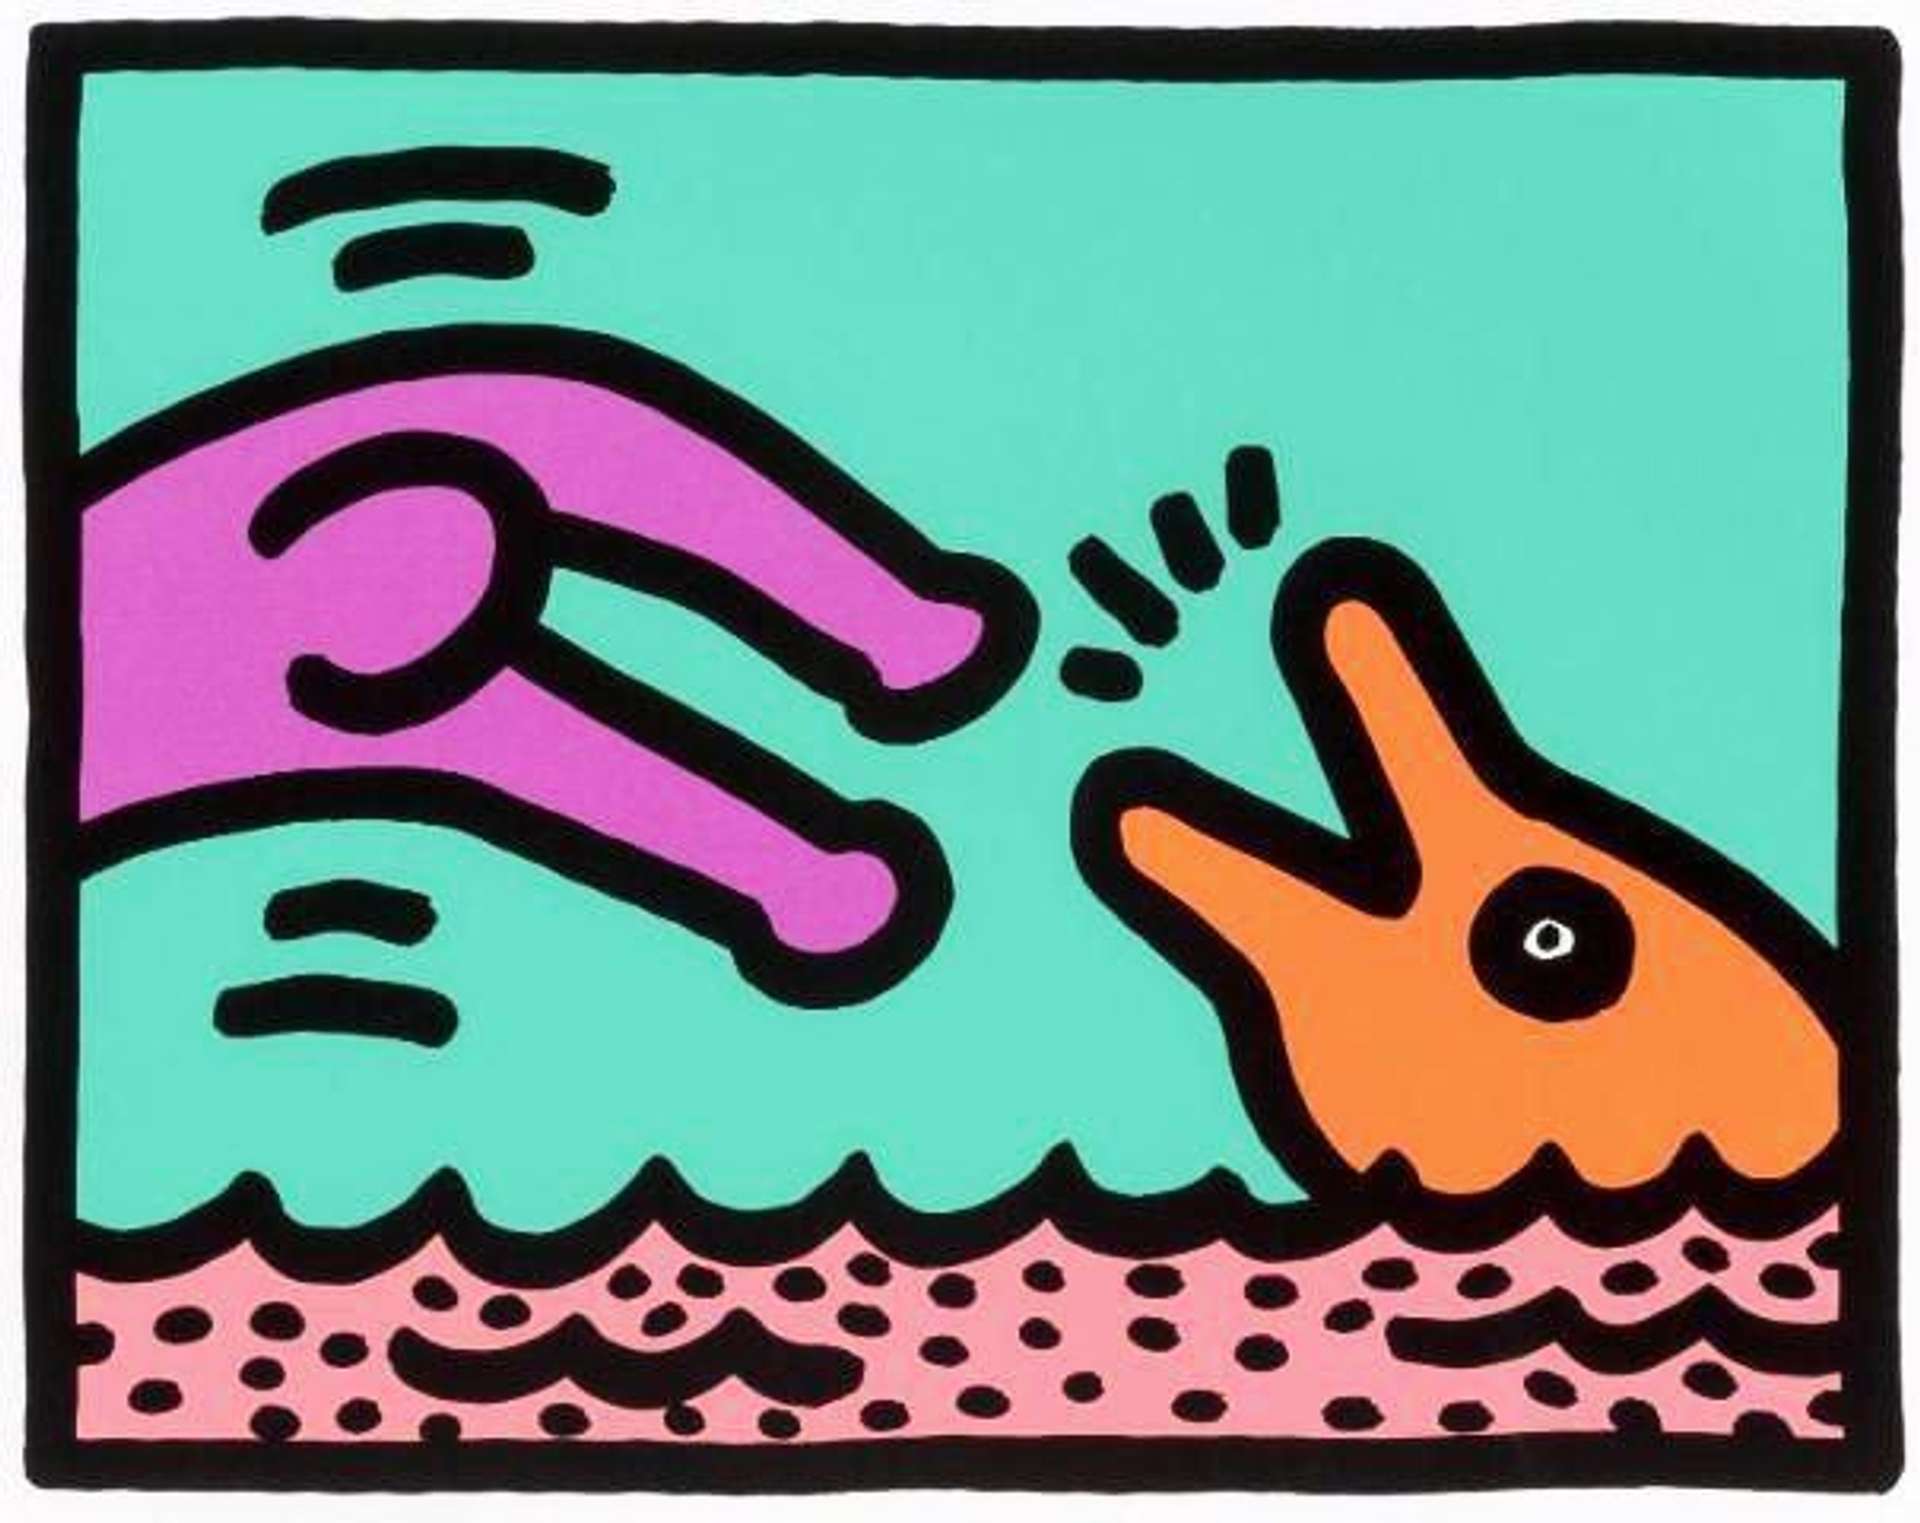 Keith Haring: Pop Shop V, Plate I - Signed Print